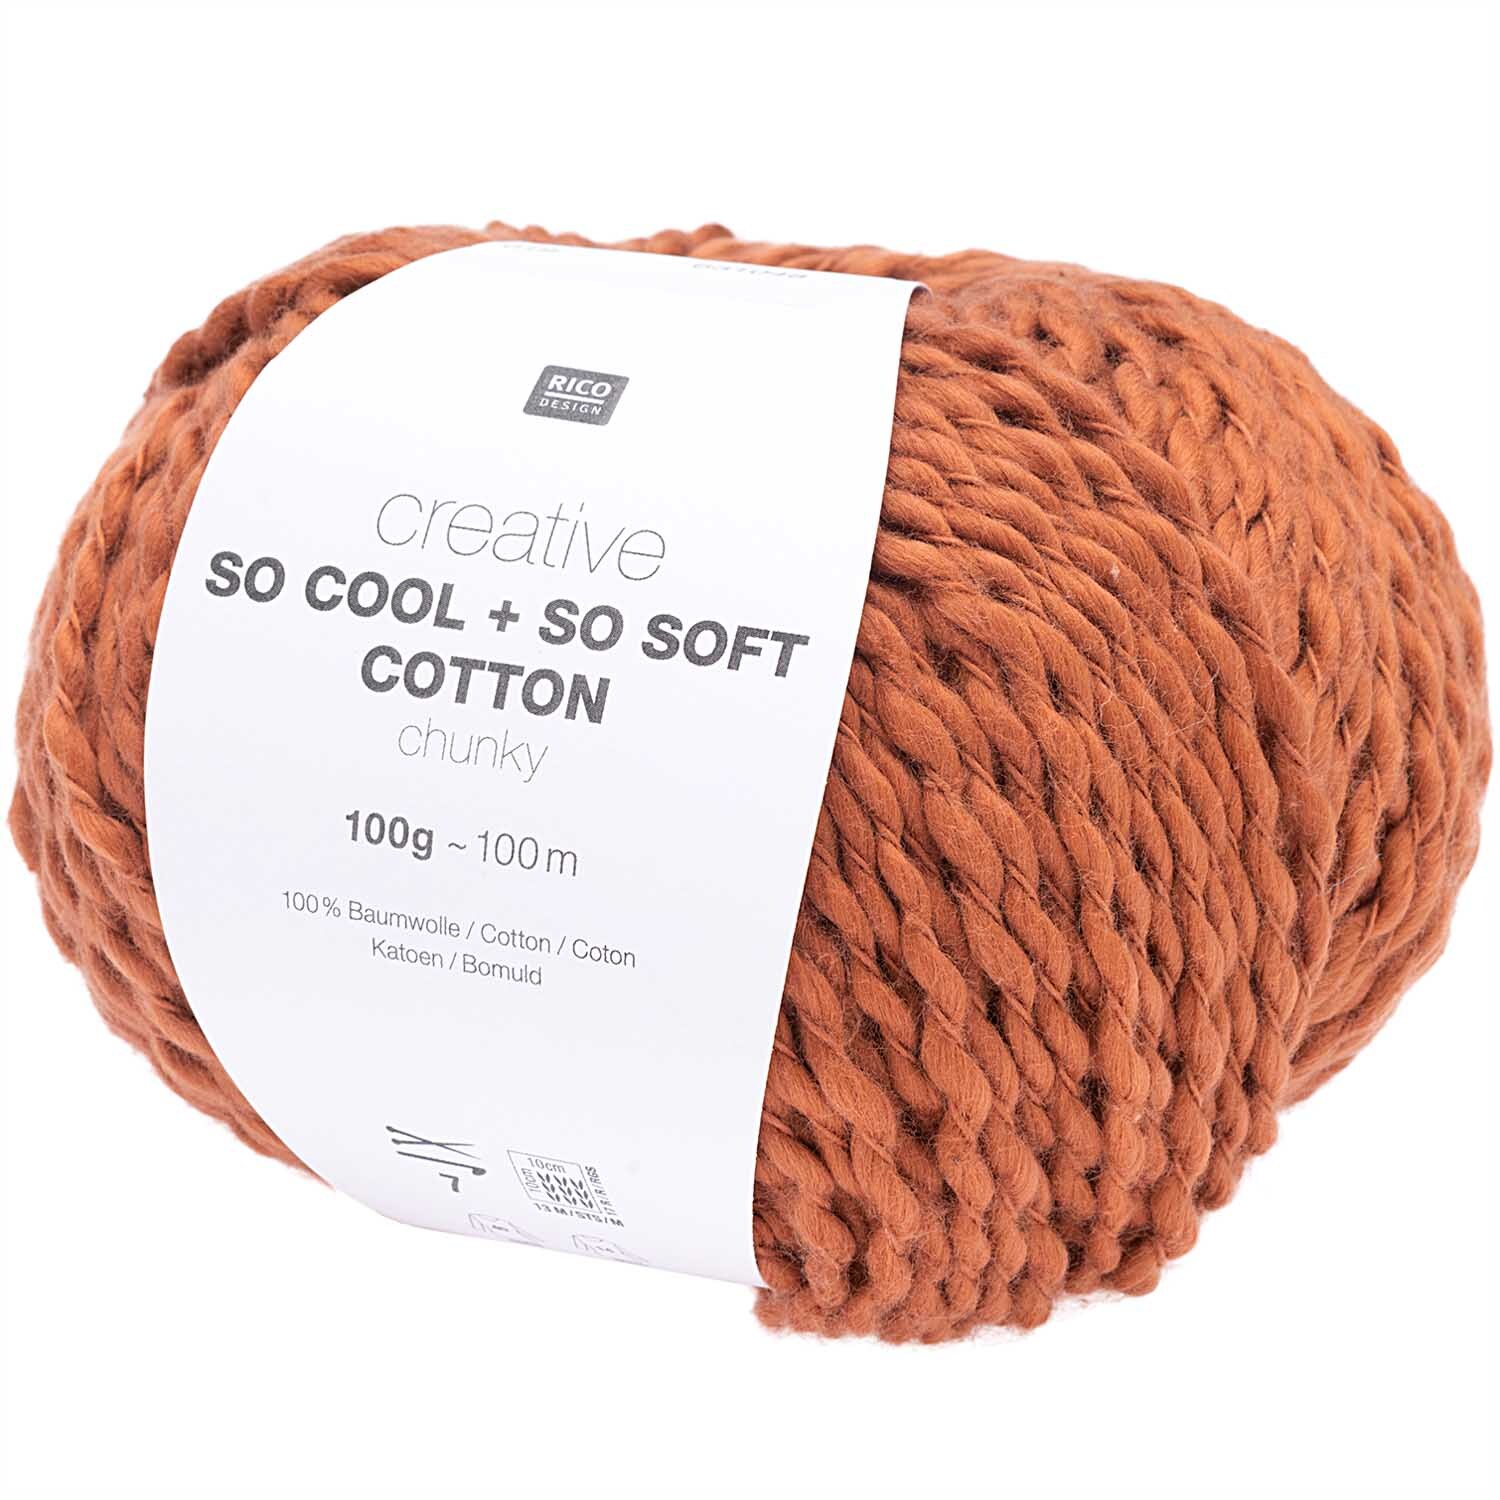 Creative So Cool + So Soft Cotton chunky